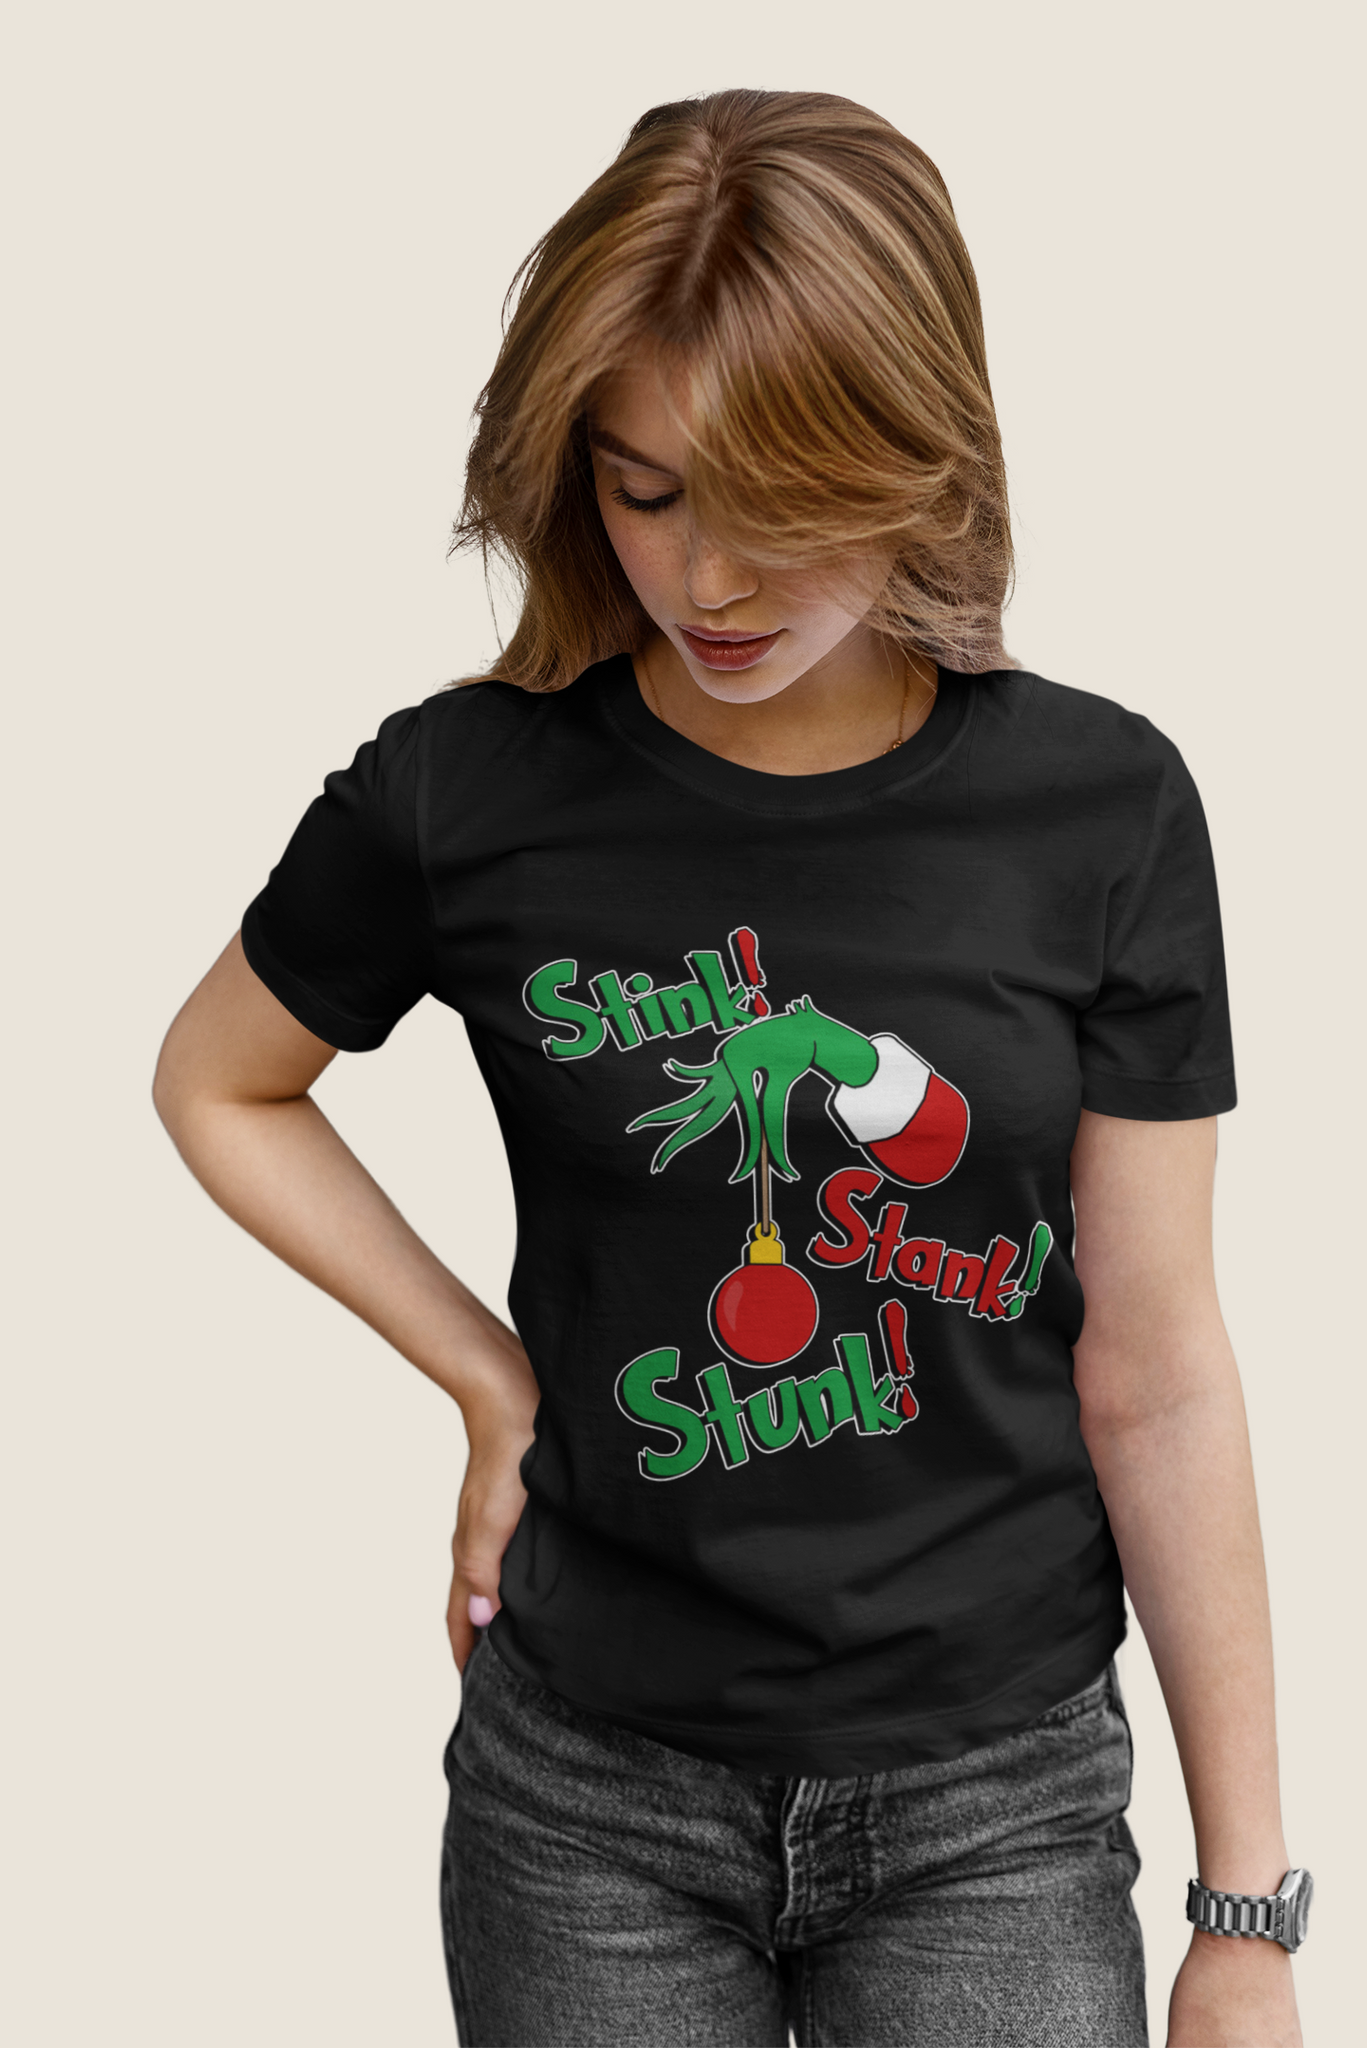 Grinch T Shirt, Stink Stank Stunk Tshirt, Grinch Hand Shirt, Christmas Movie Shirt, Christmas Gifts